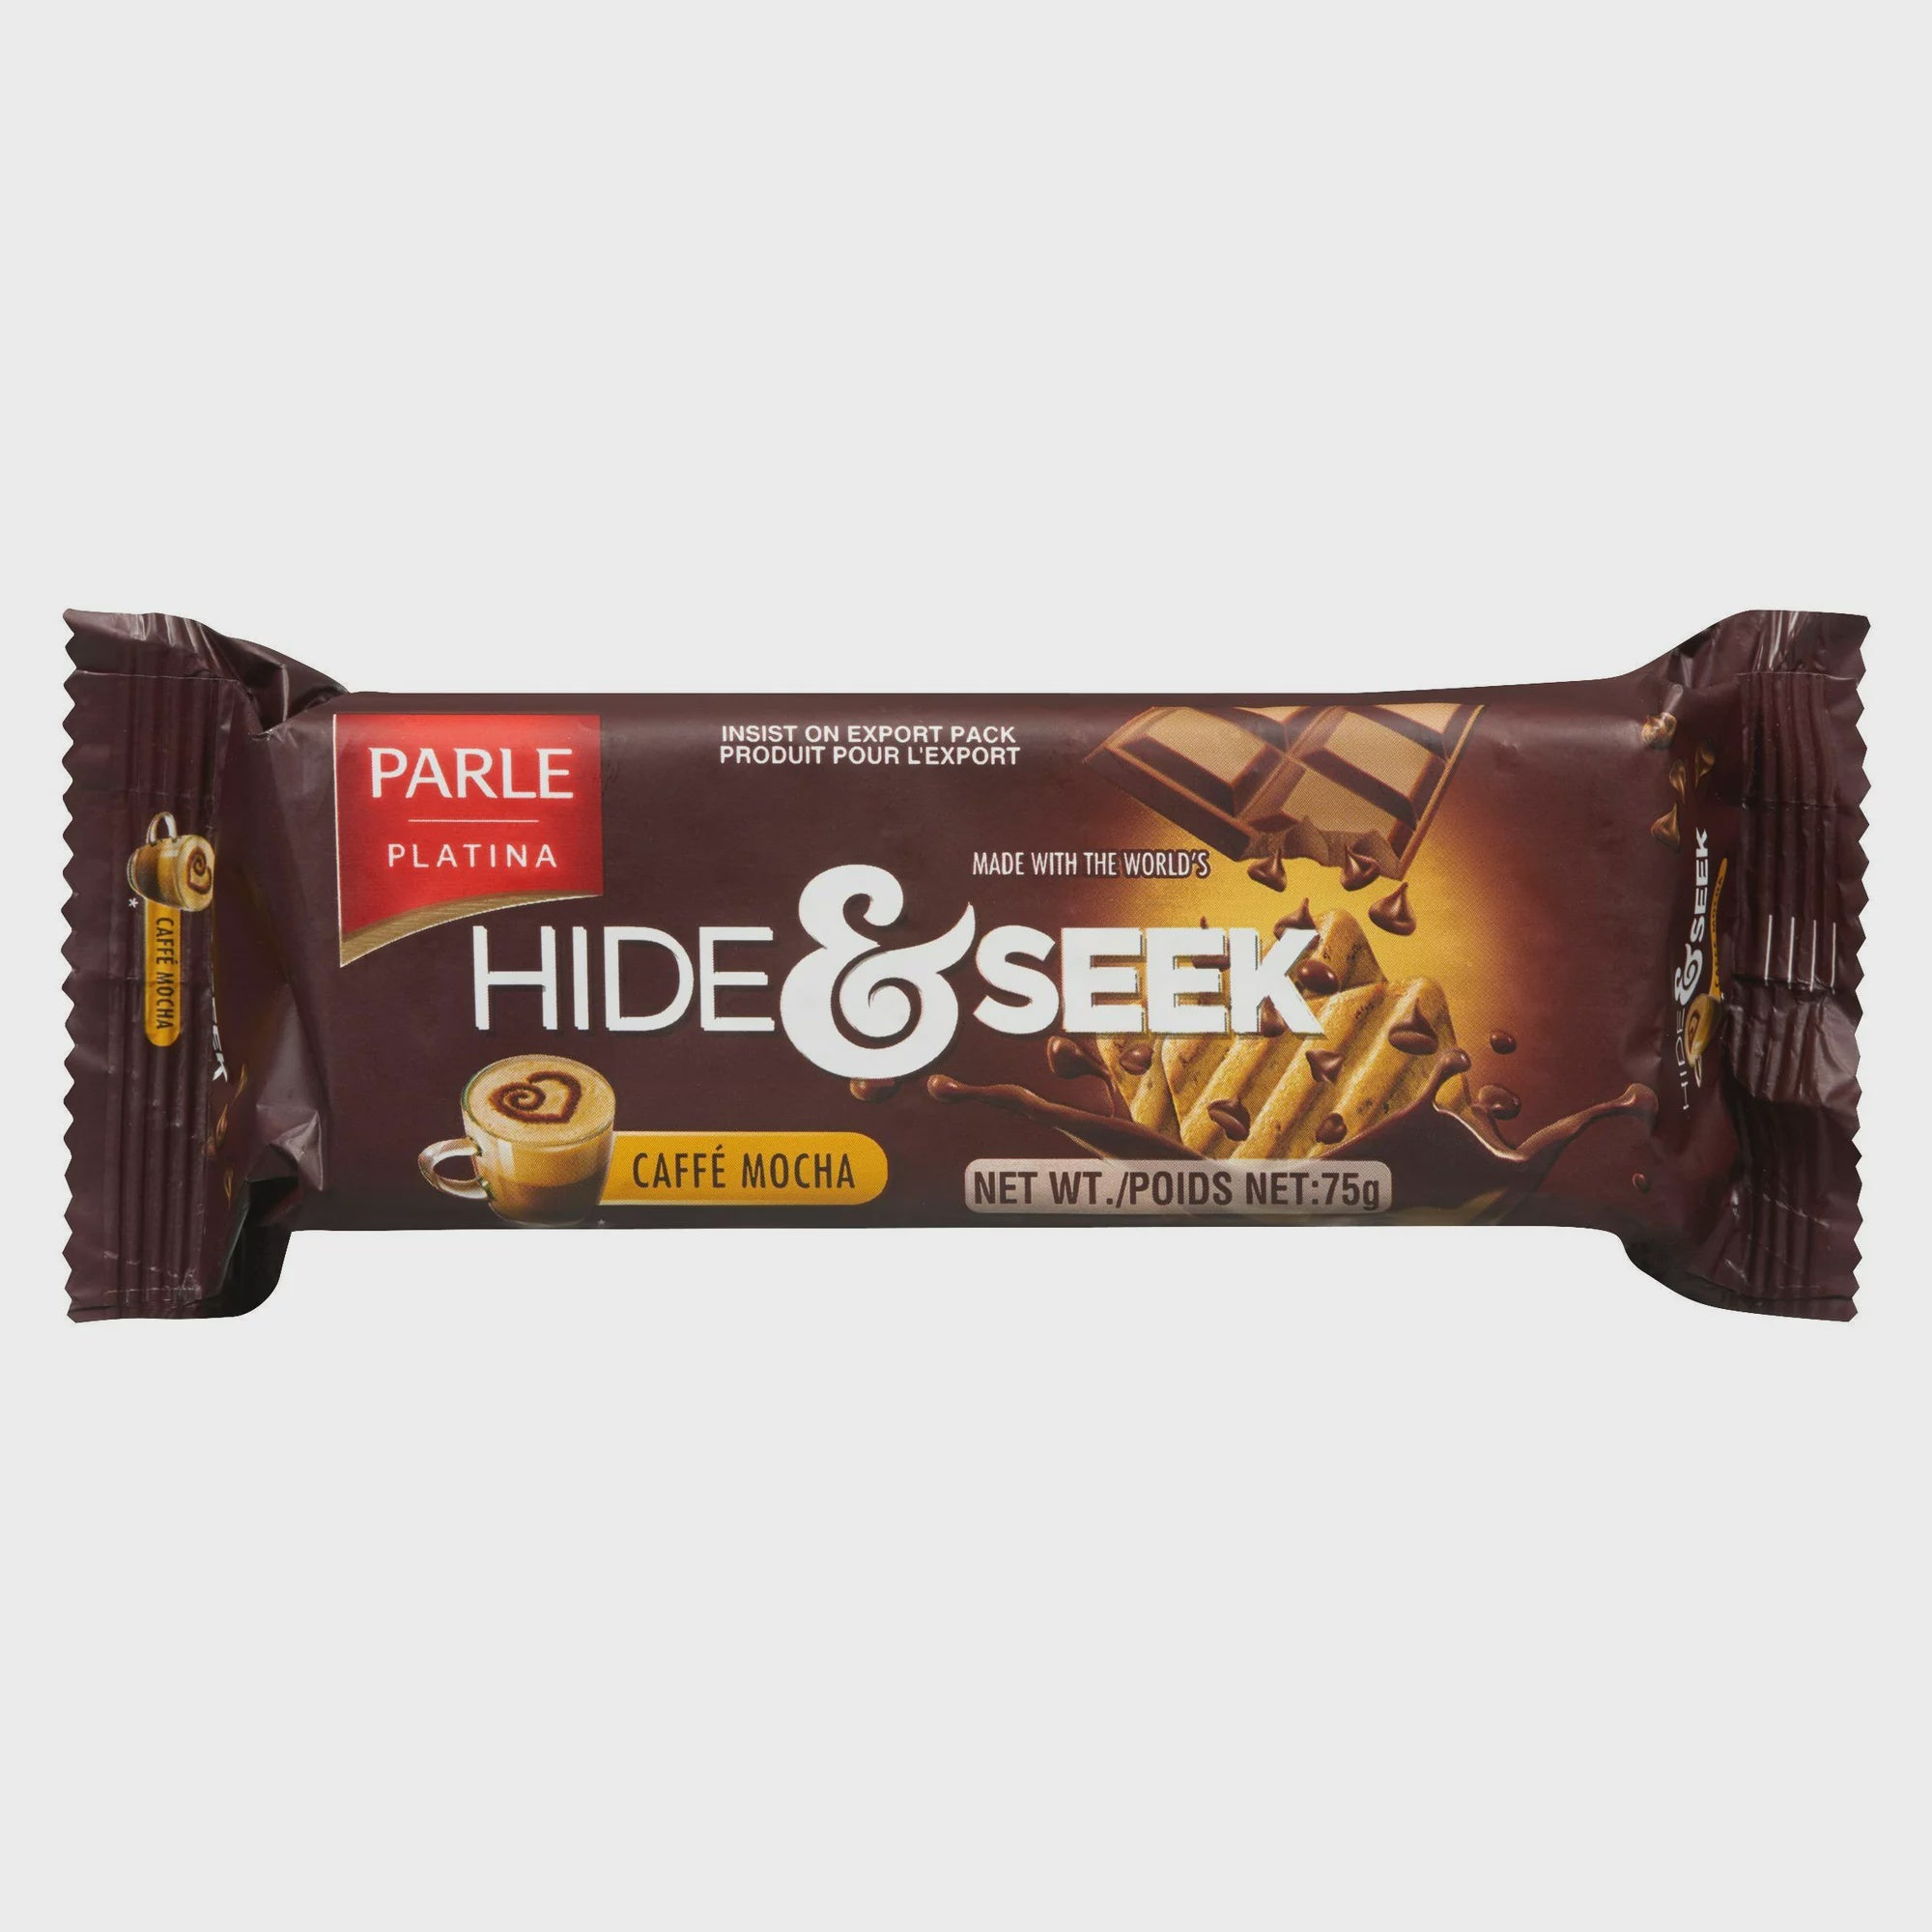 Parle - Hide & Seek Caffe Mocha 75g